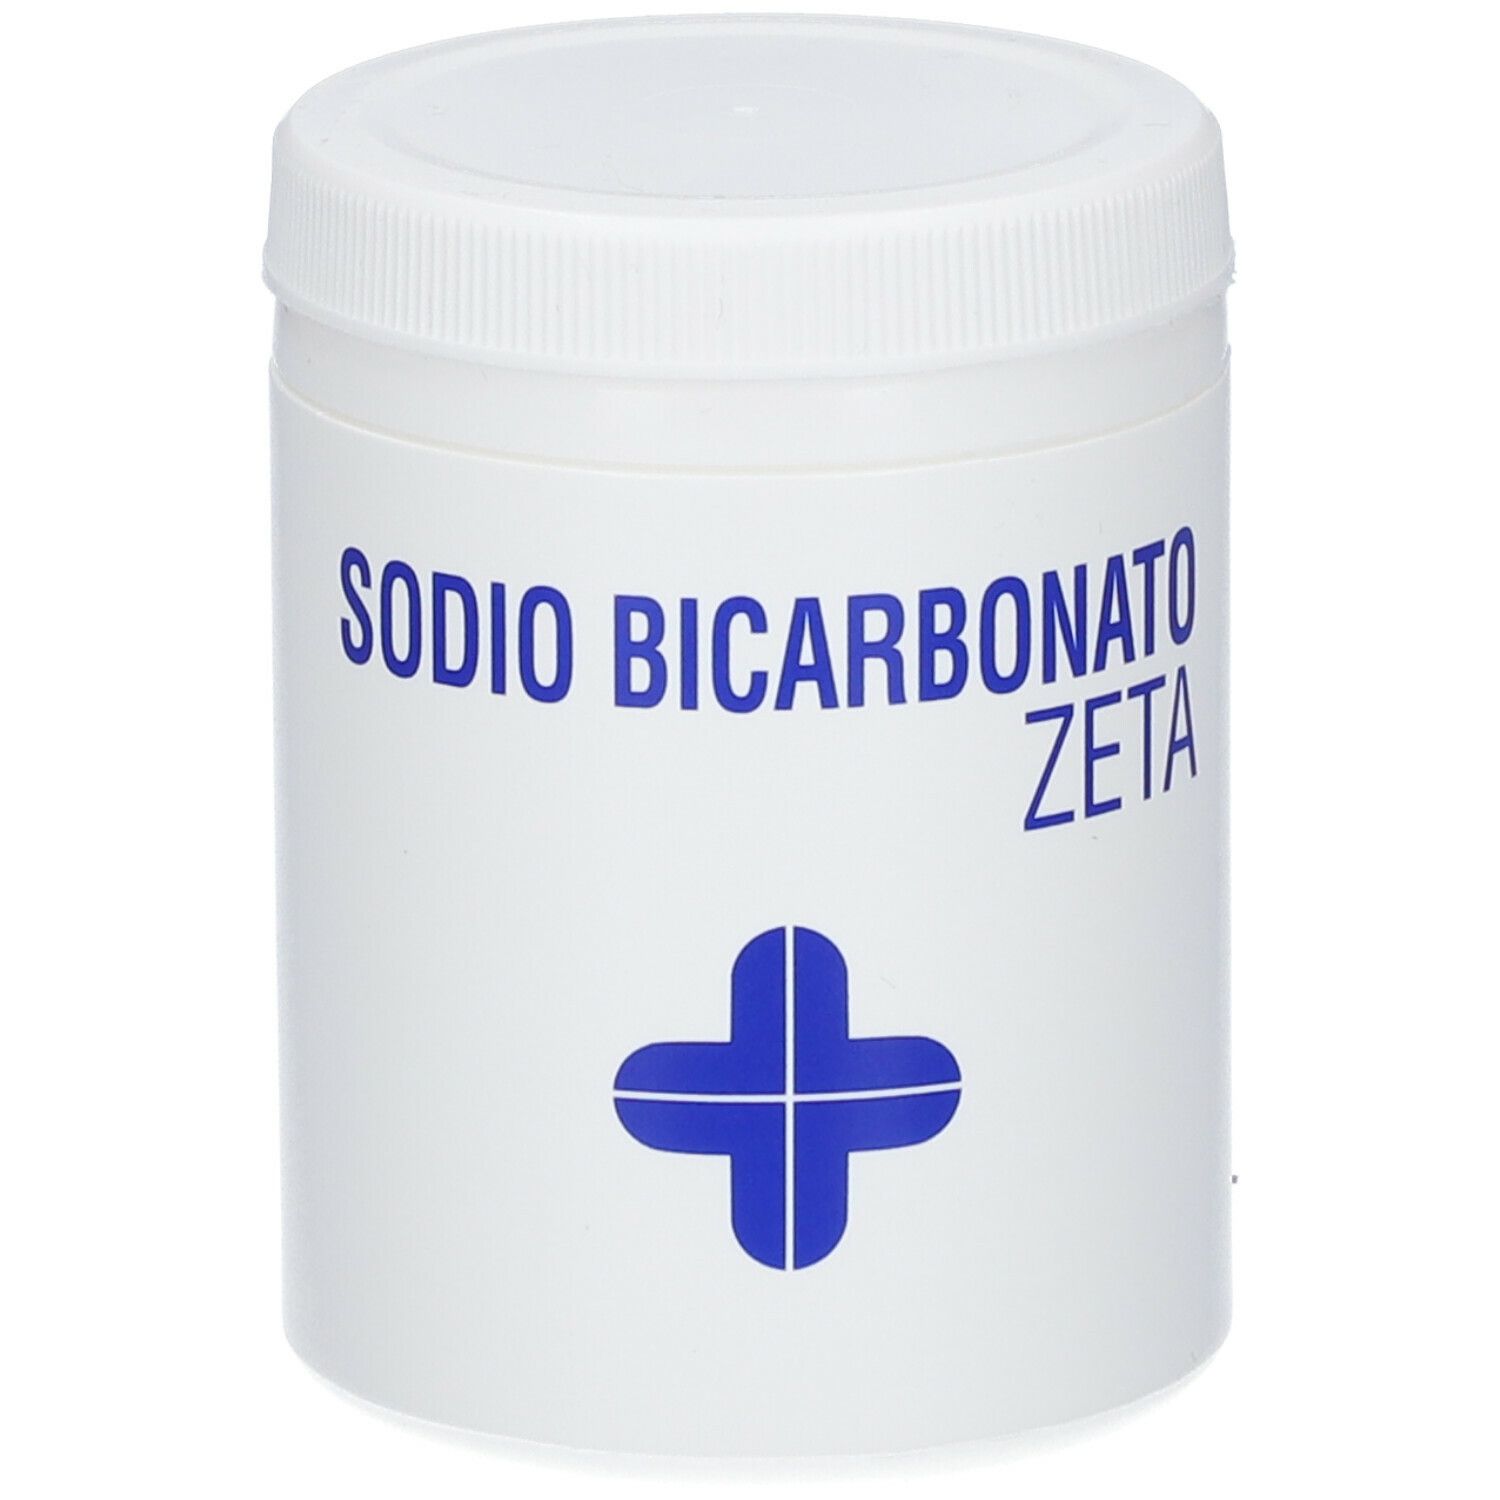 Sodio Bicarbonato ZETA